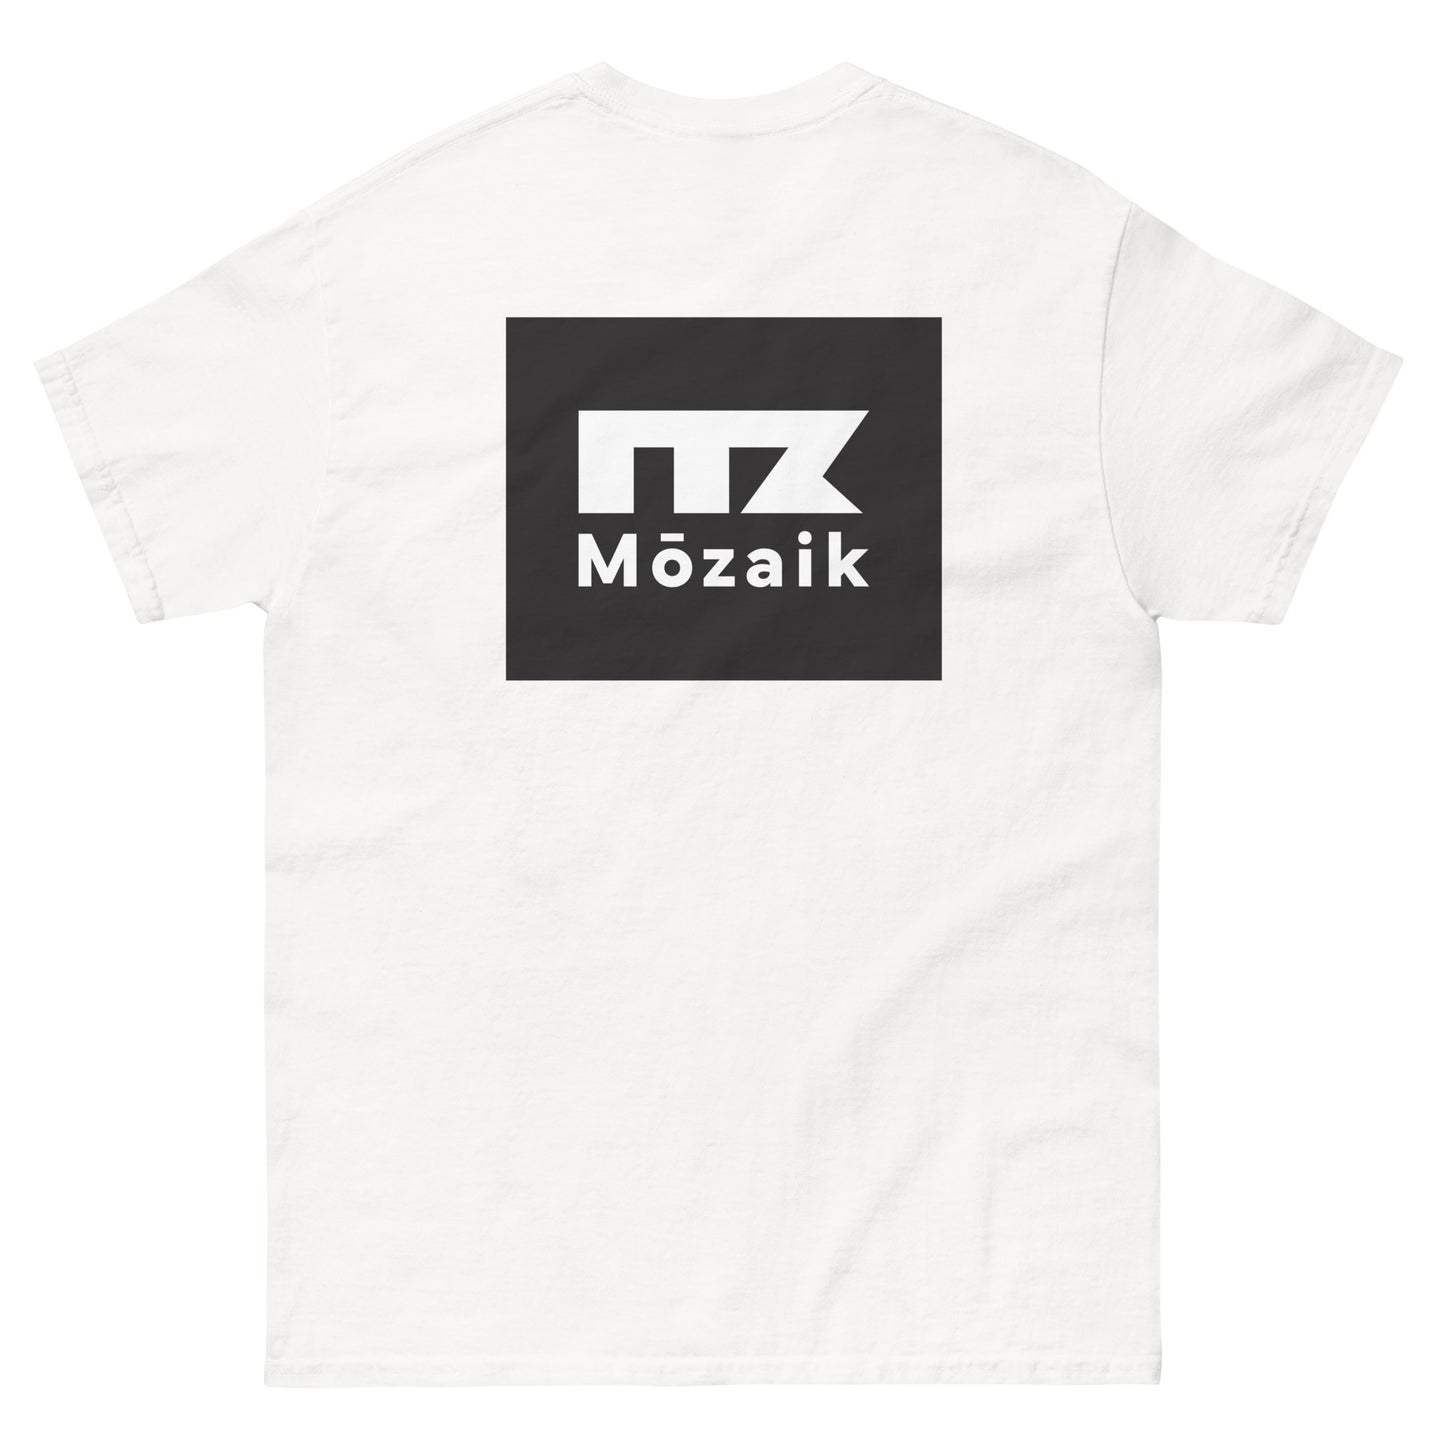 Square logo short sleeve t-shirt